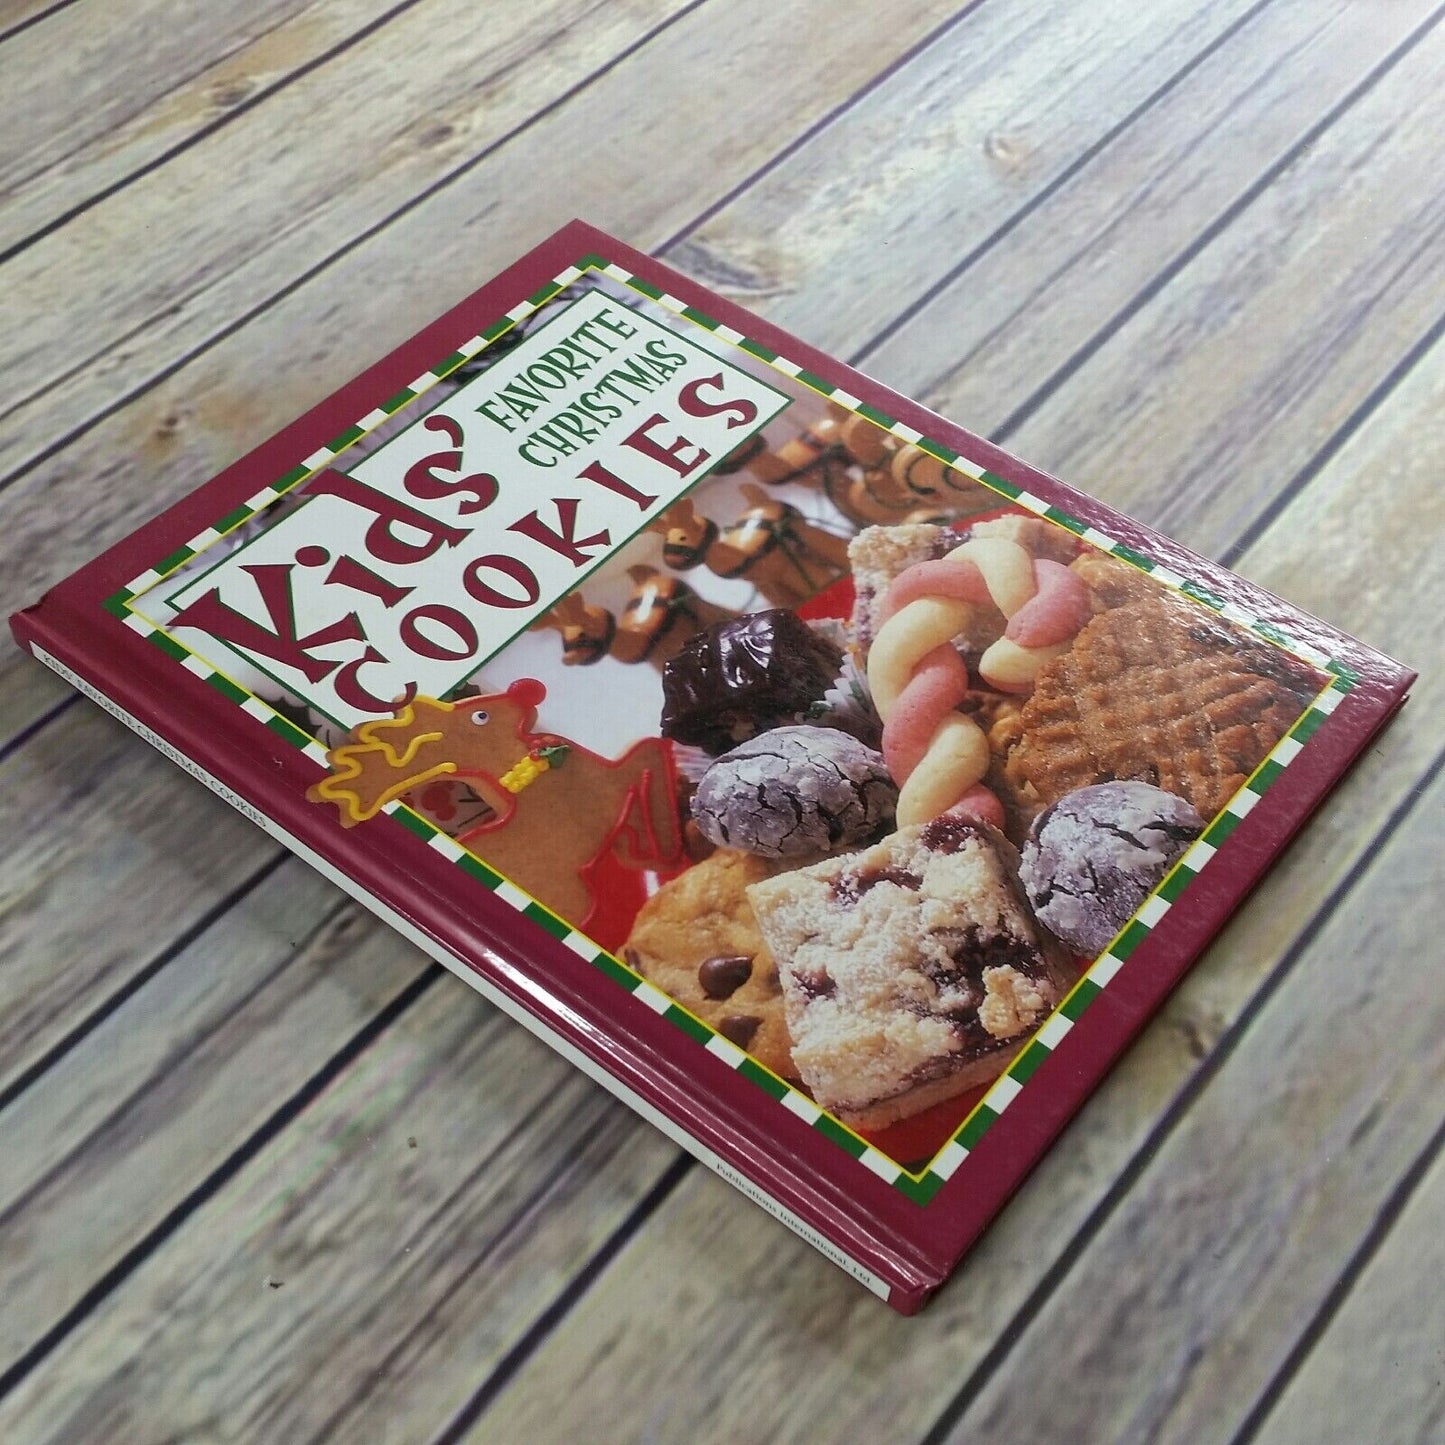 Kids Favorite Christmas Cookies Cookbook Hardcover 1999 Publications International